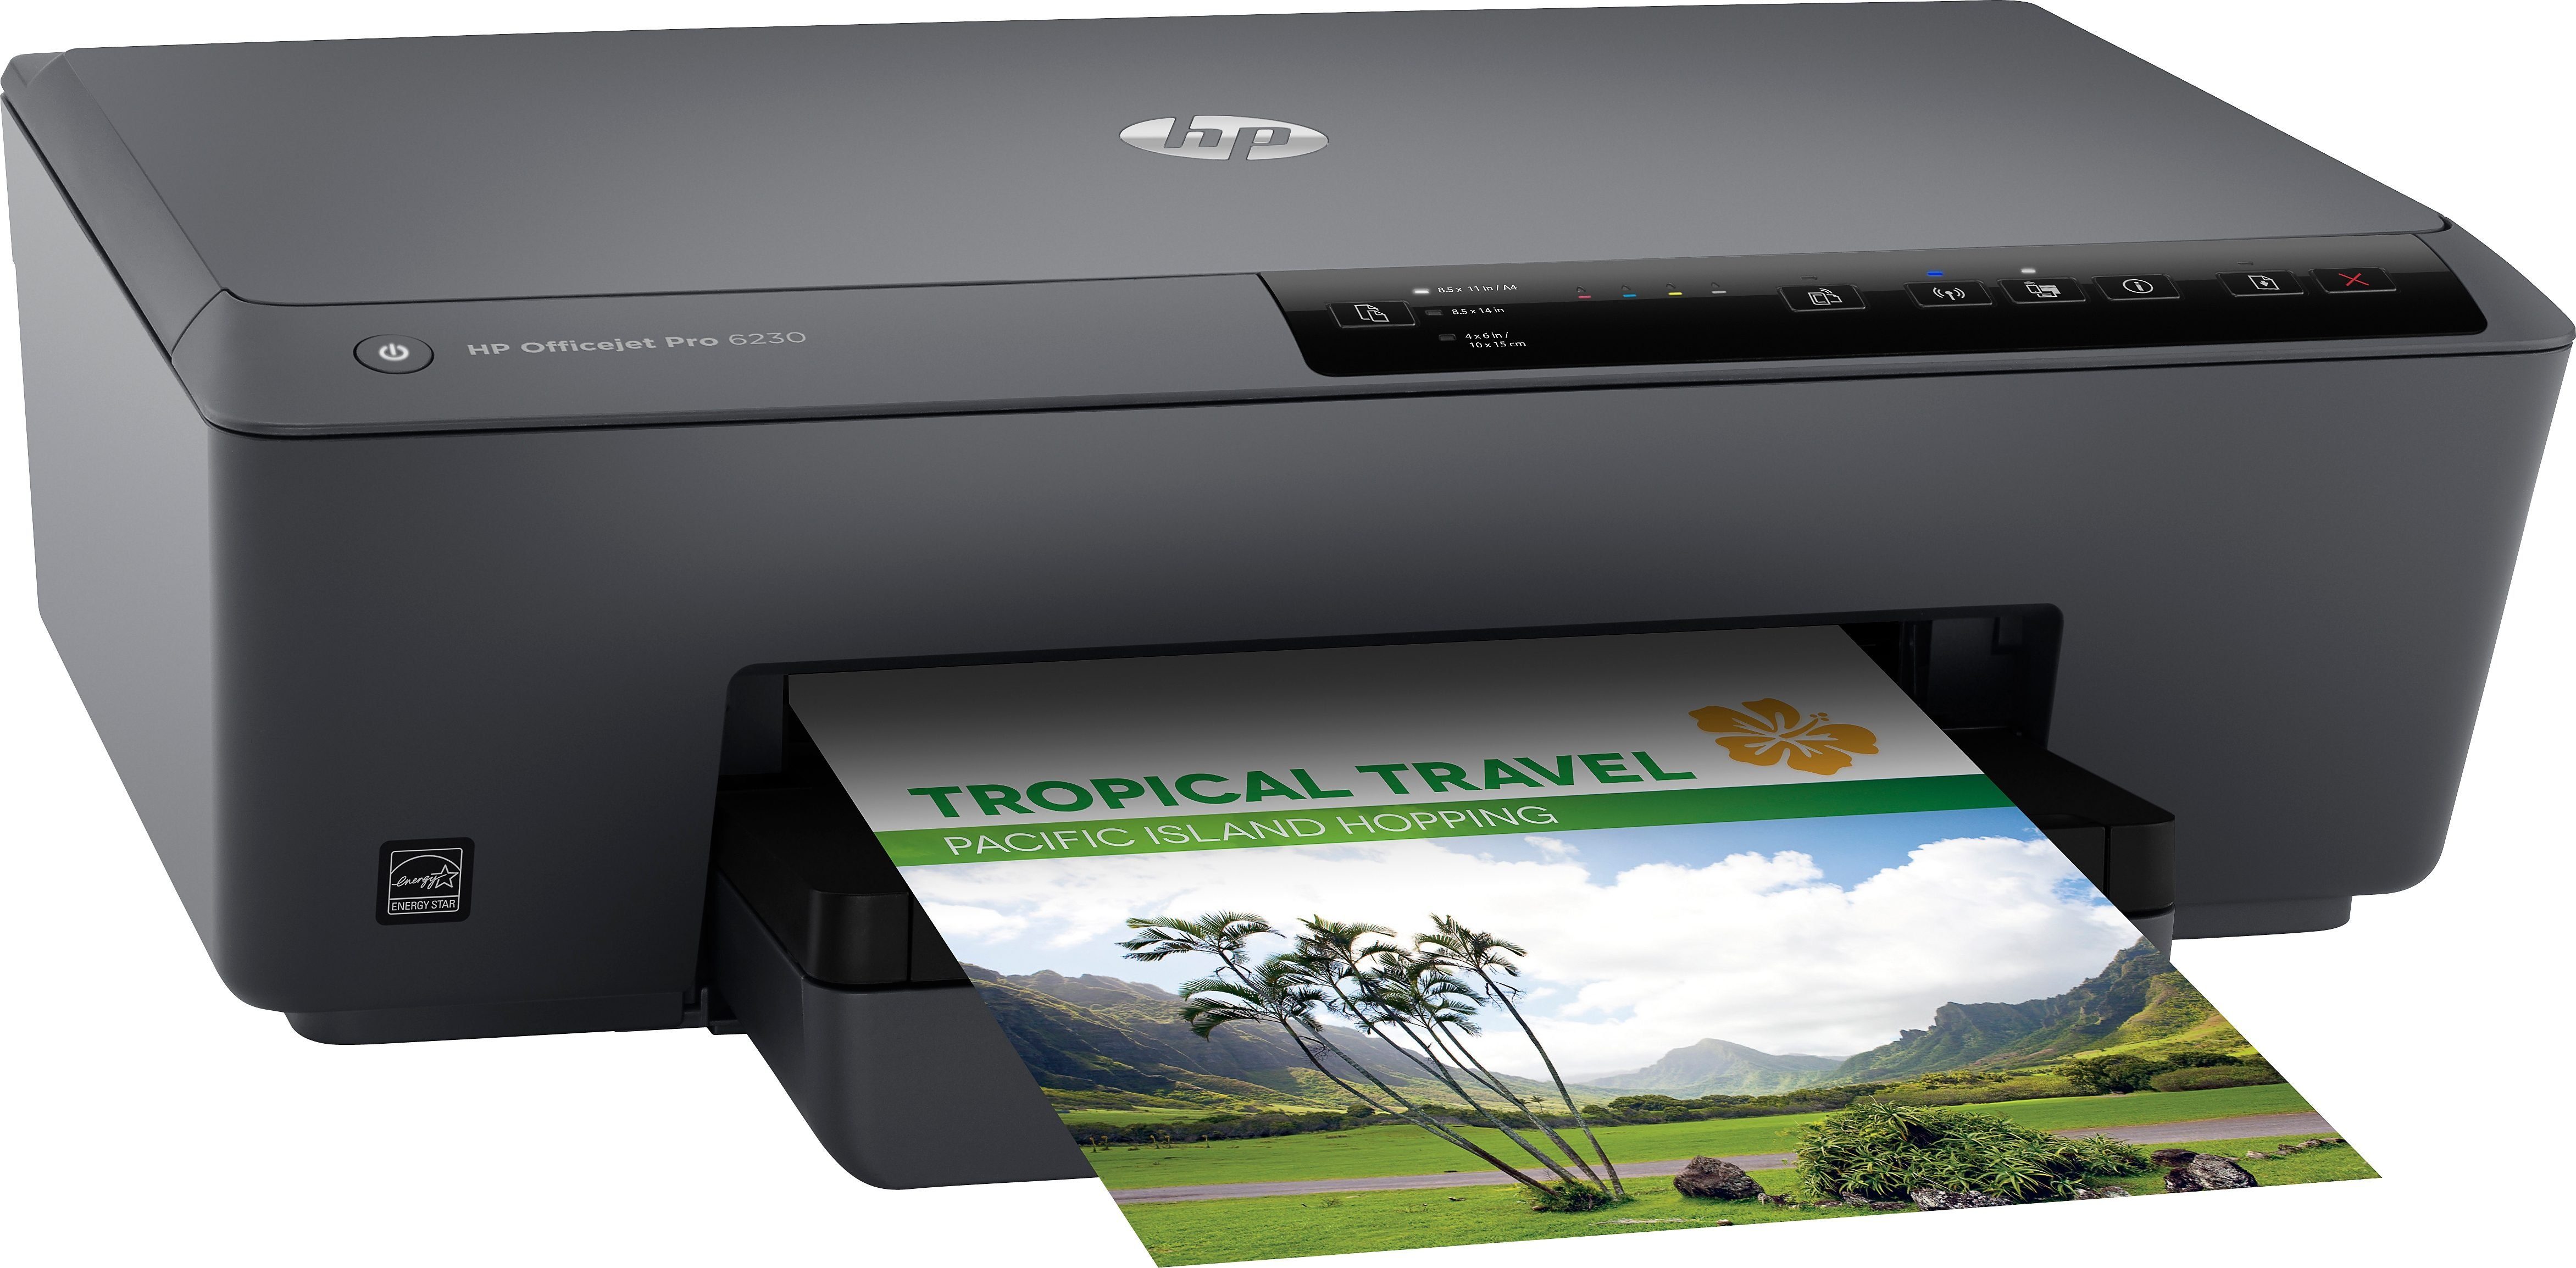 kompatibel) Ink (Wi-Fi), Instant Pro Tintenstrahldrucker, ePrinter Officejet HP (WLAN 6230 HP+